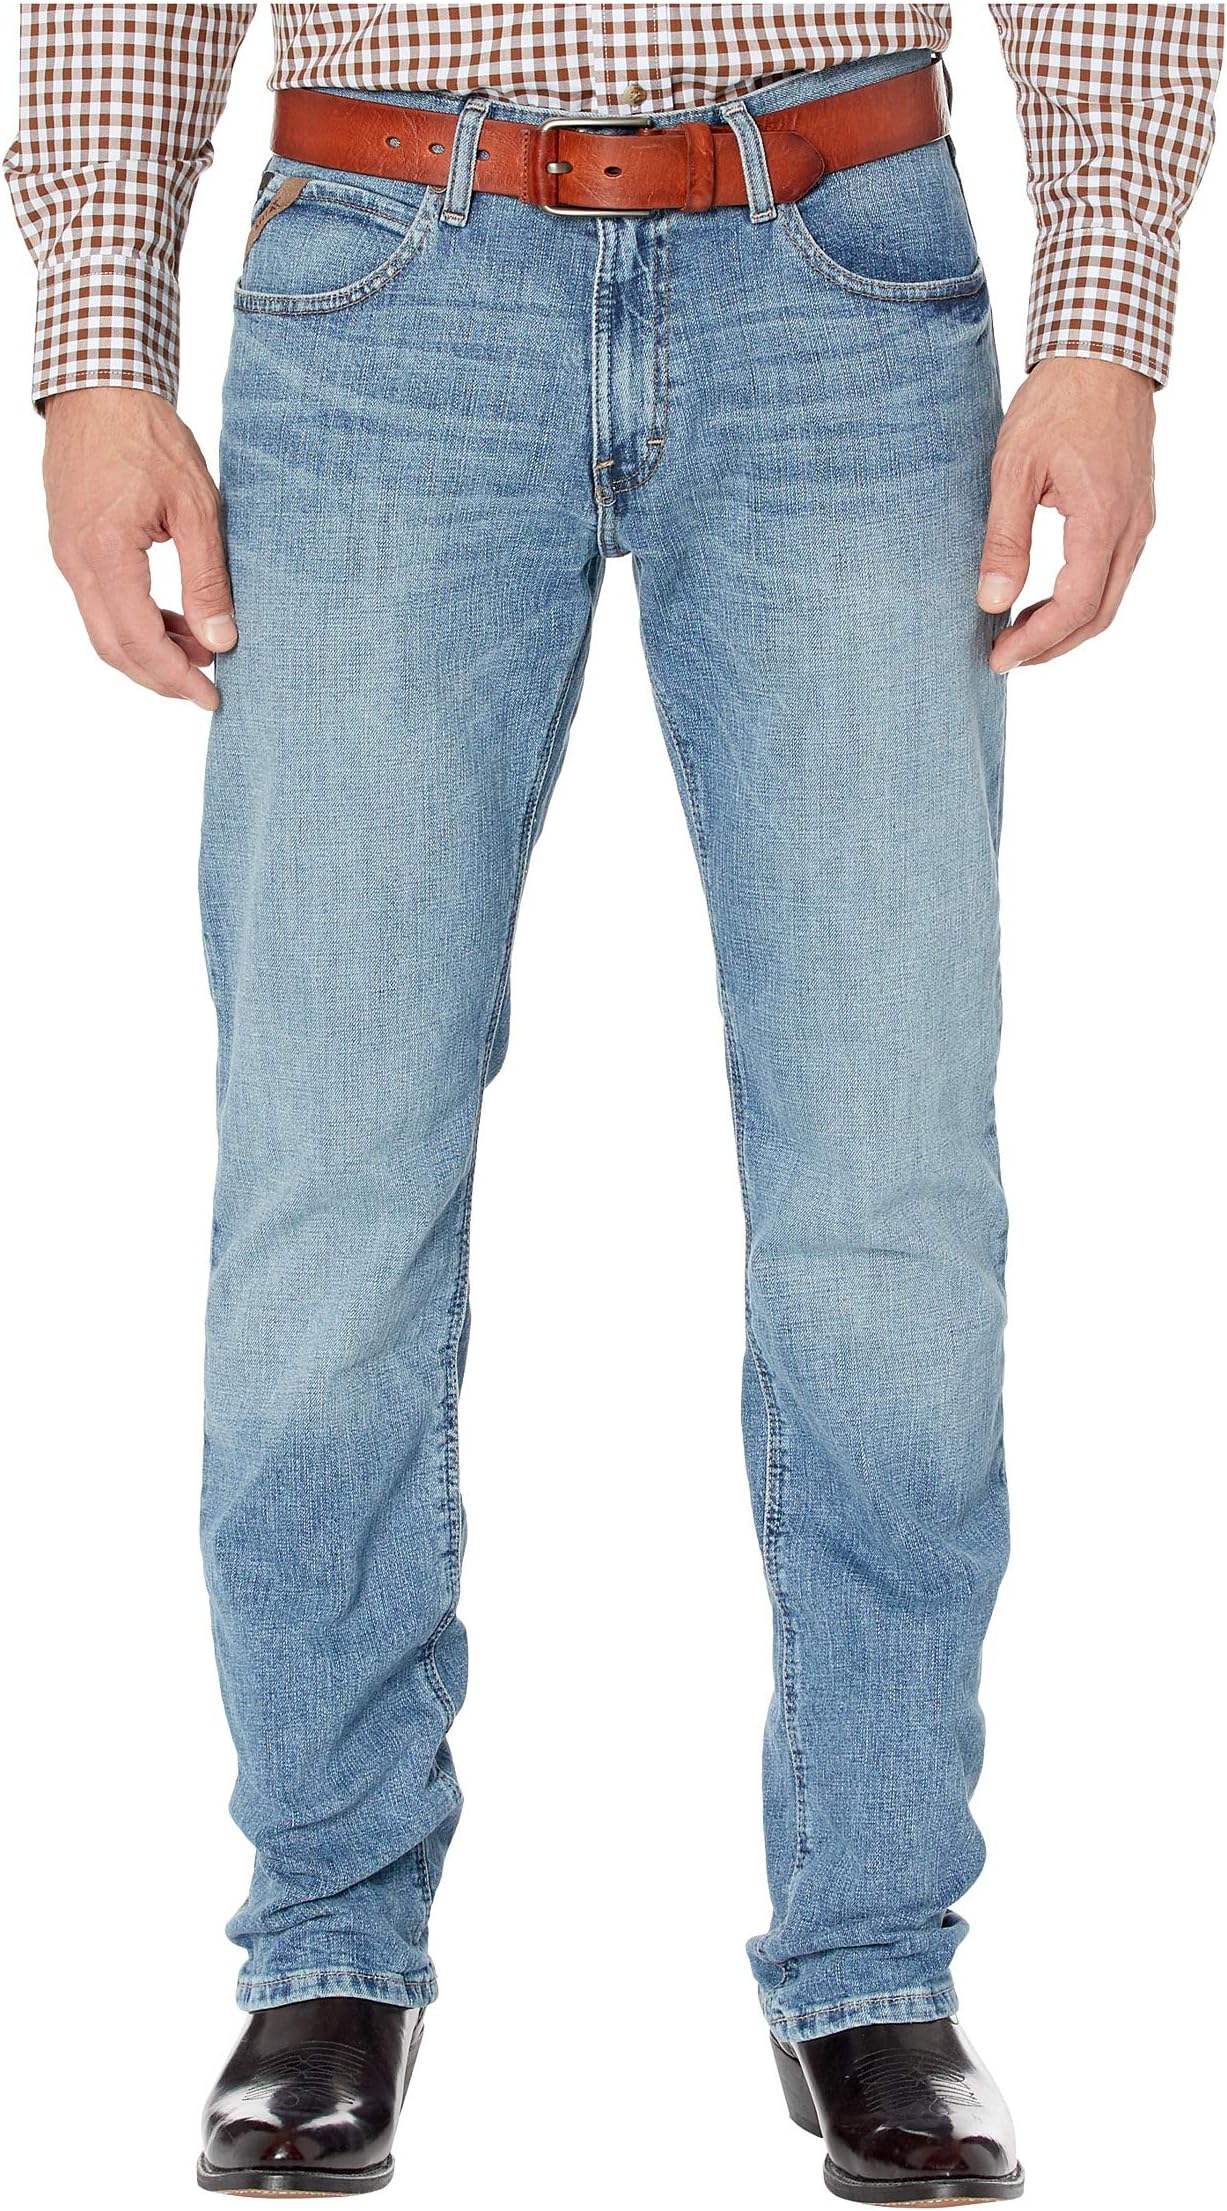 Джинсы M4 Low Rise Stackable Straight Leg Jeans in Sawyer Ariat, цвет Sawyer цена и фото